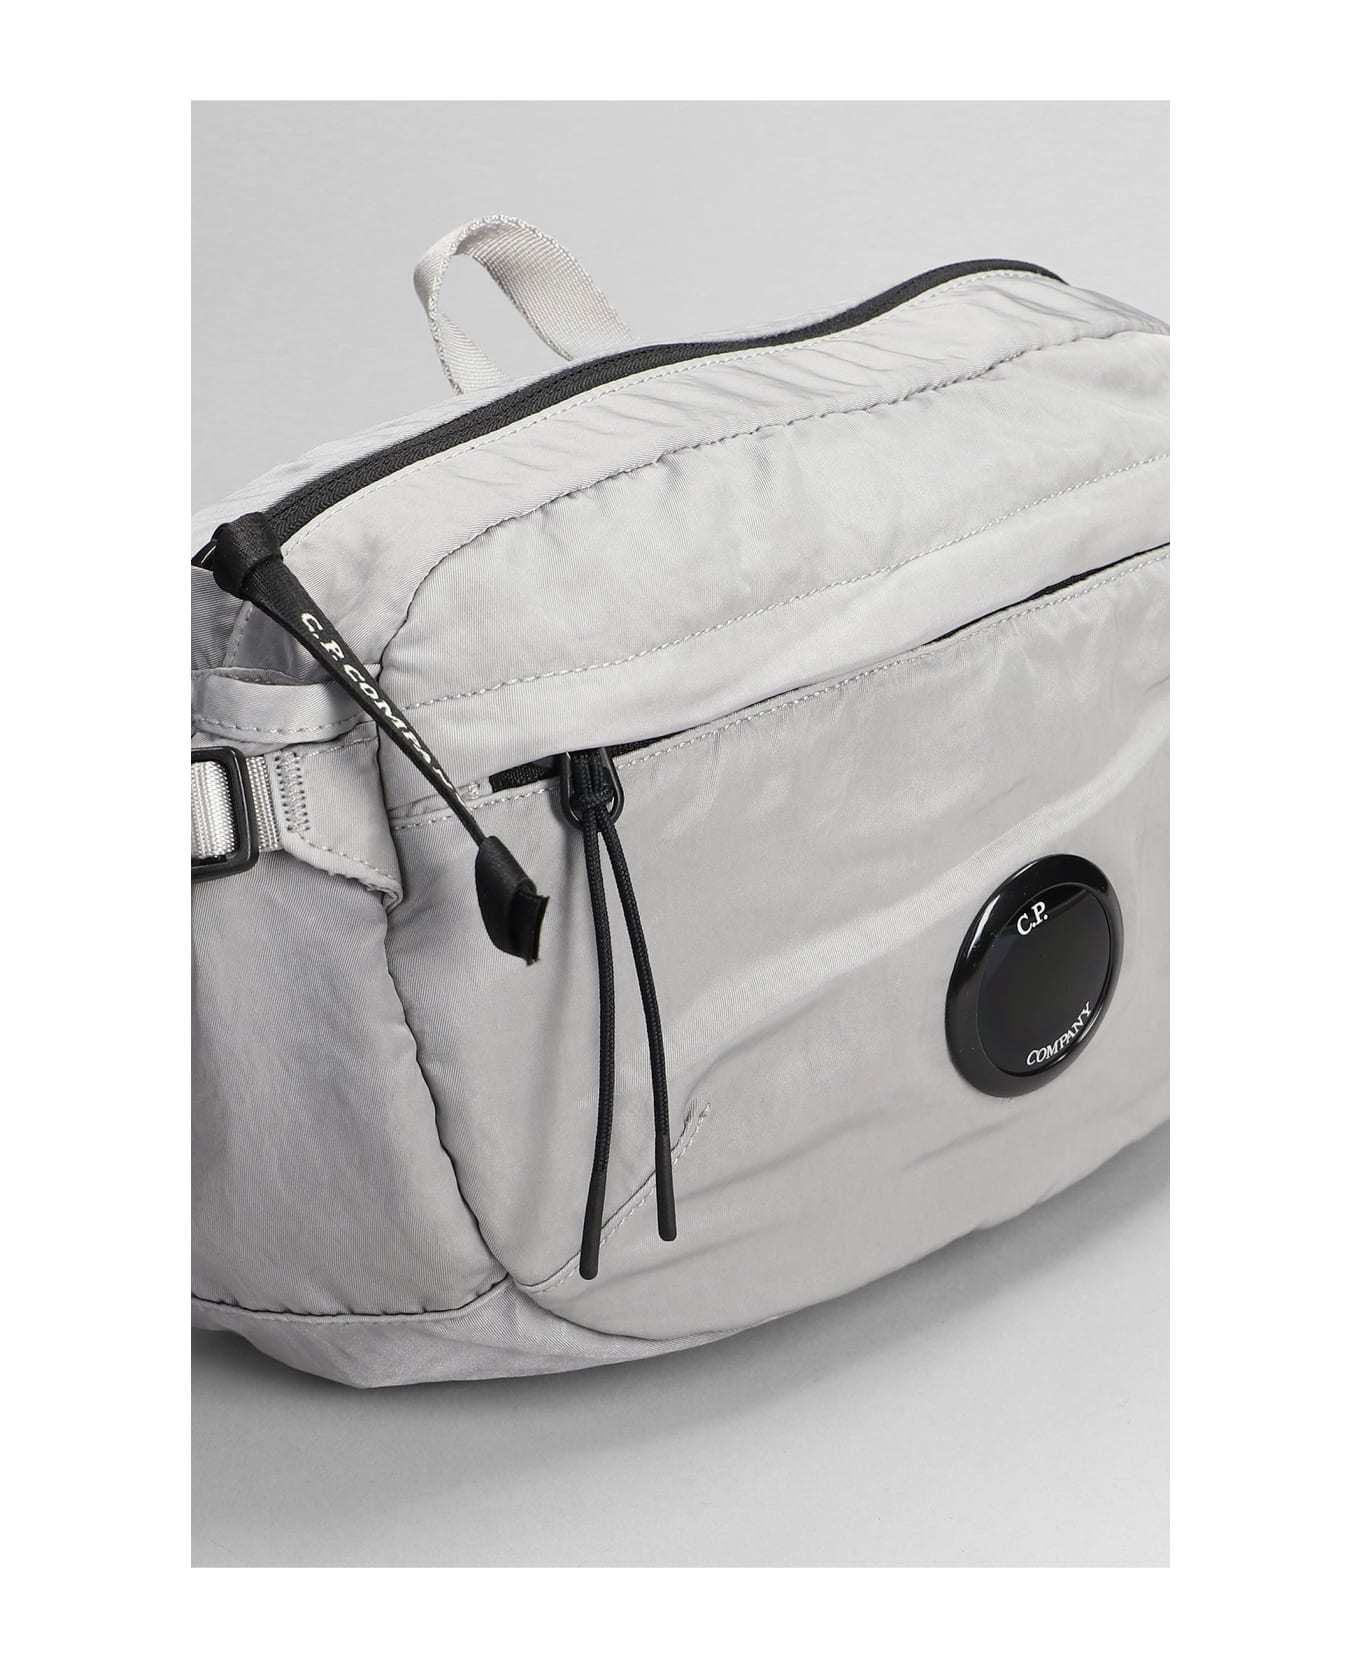 C.P. Company Nylon B Waist Bag In Grey Polyamide - Drizzle Grey